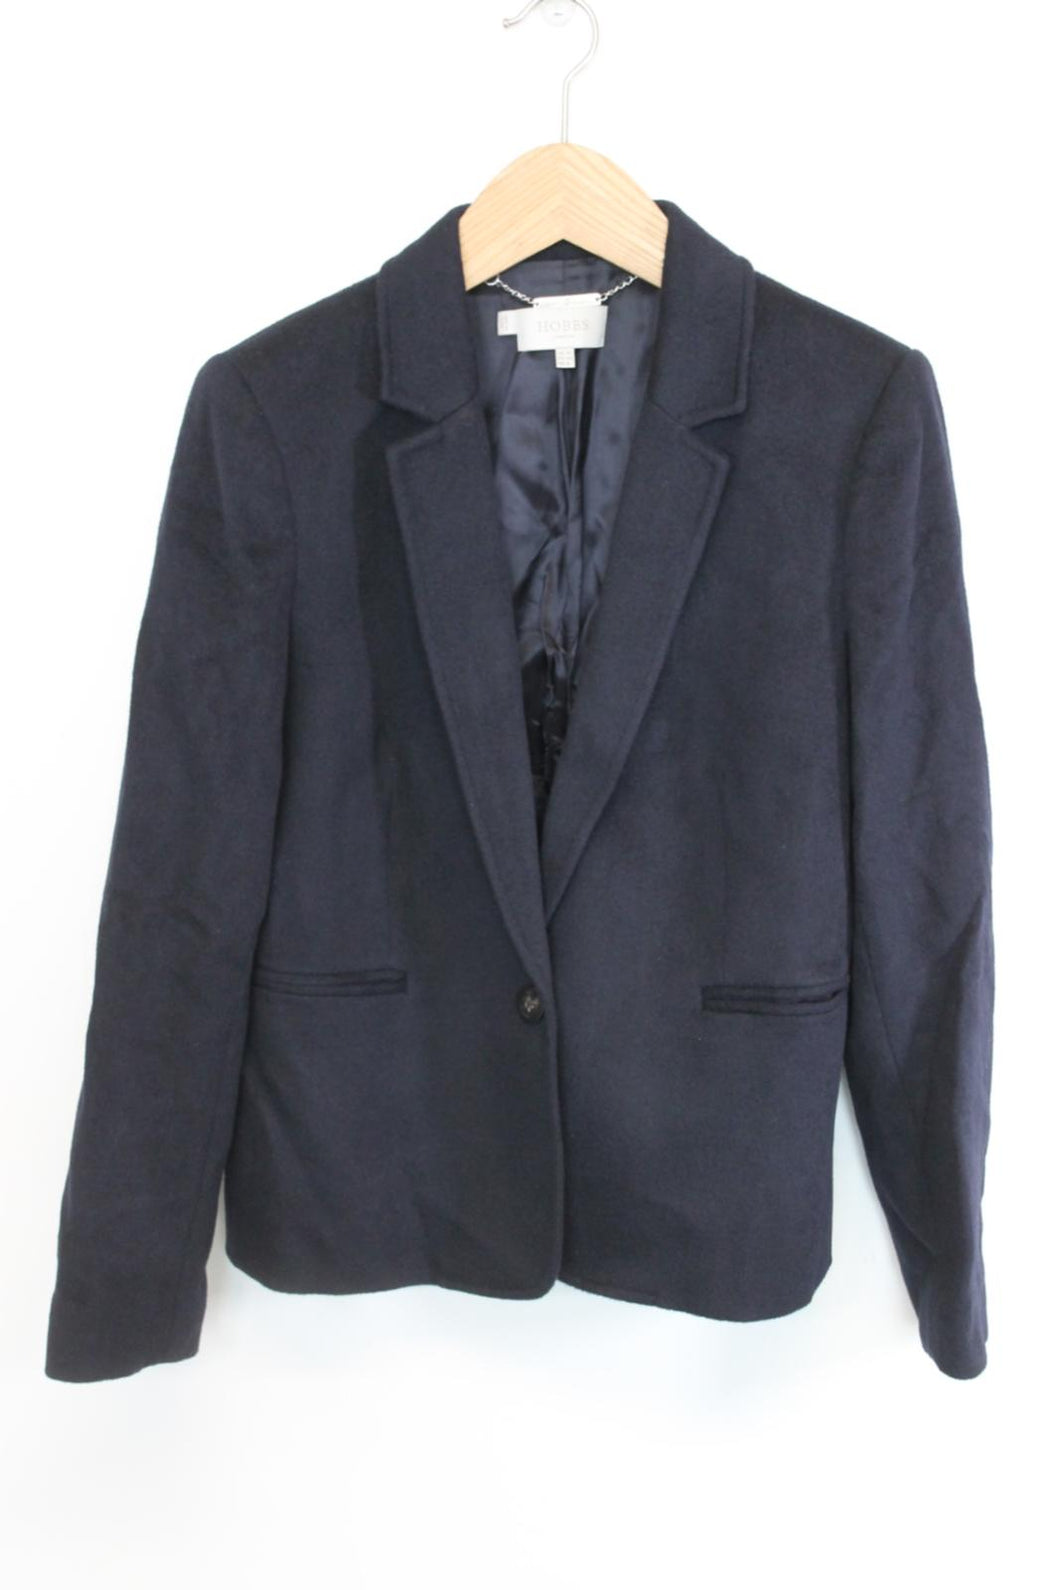 HOBBS Ladies Navy Blue Wool Notch Lapel Long Sleeve Blazer Jacket EU40 UK12